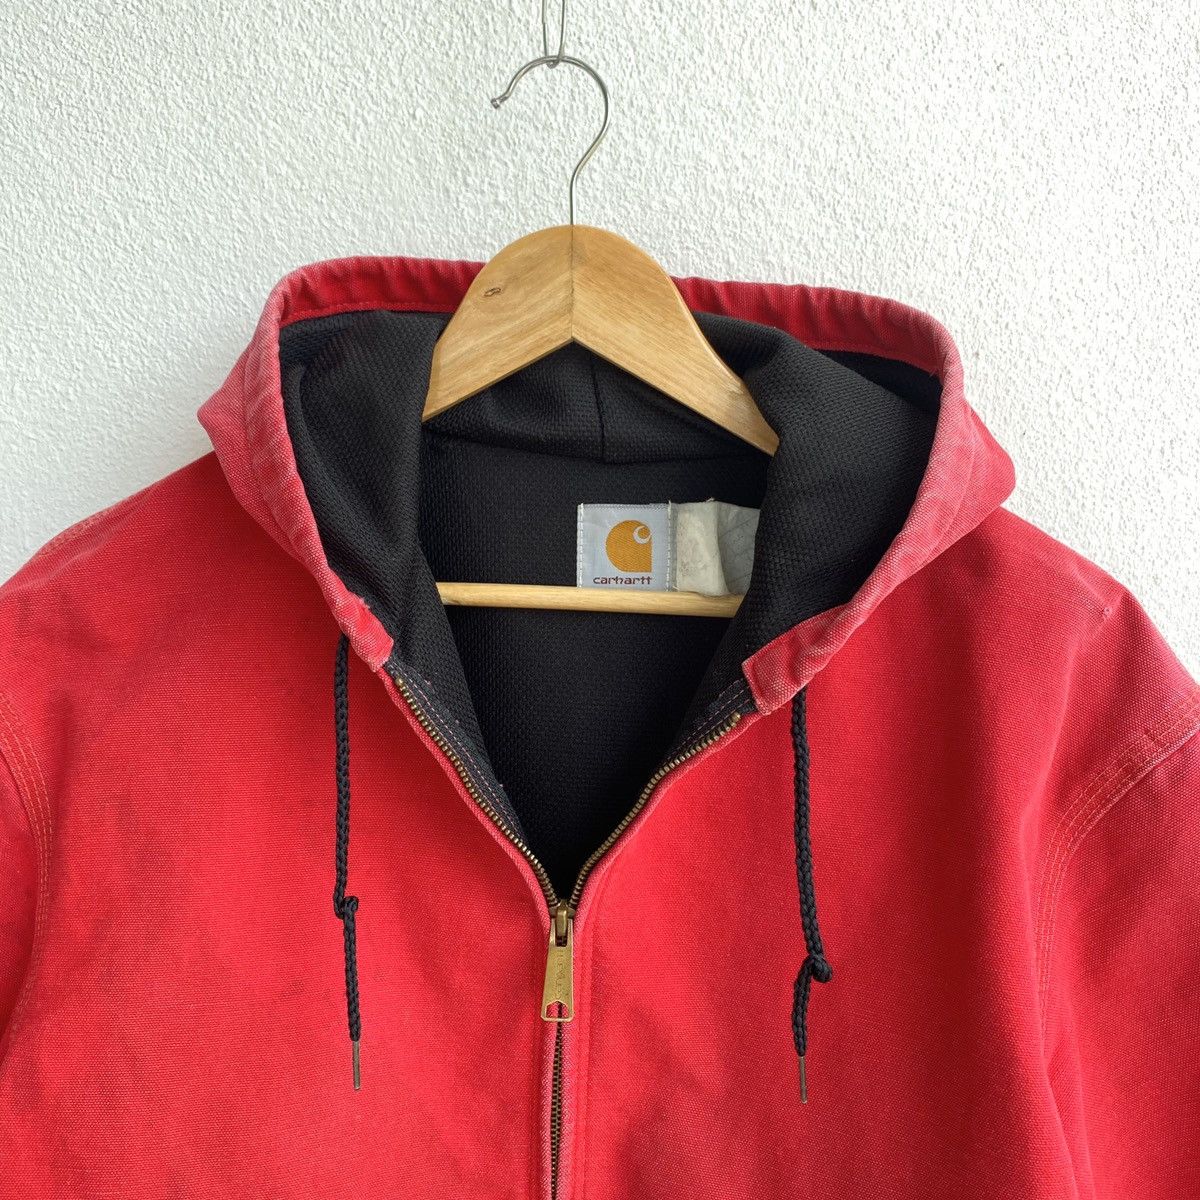 Carhartt Carhartt Hooded Zip Red Jacket Size US M / EU 48-50 / 2 - 2 Preview